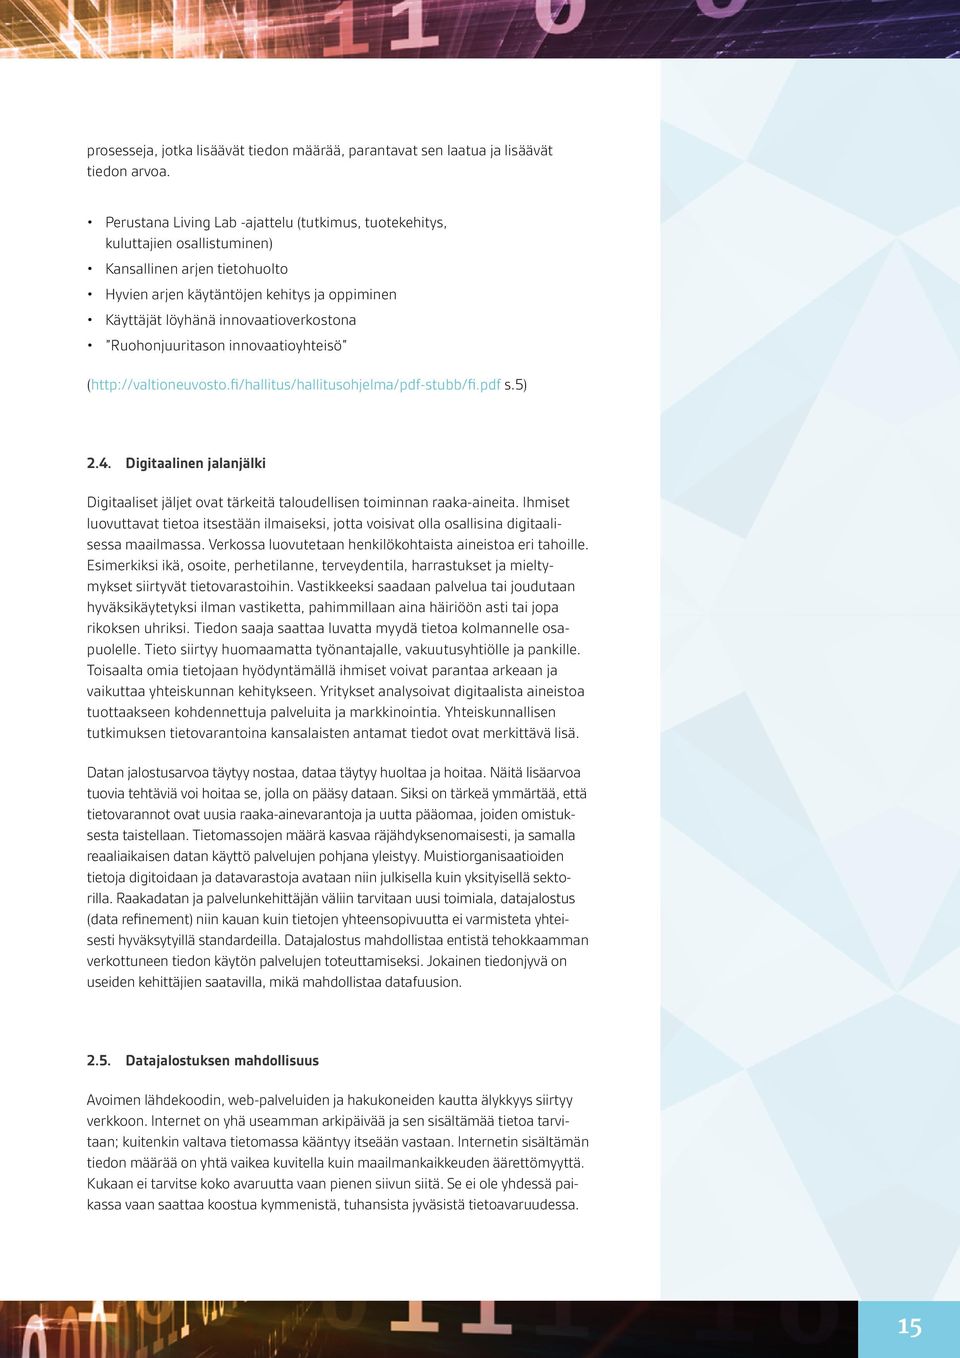 Ruohonjuuritason innovaatioyhteisö (http://valtioneuvosto.fi/hallitus/hallitusohjelma/pdf-stubb/fi.pdf s.5) 2.4.